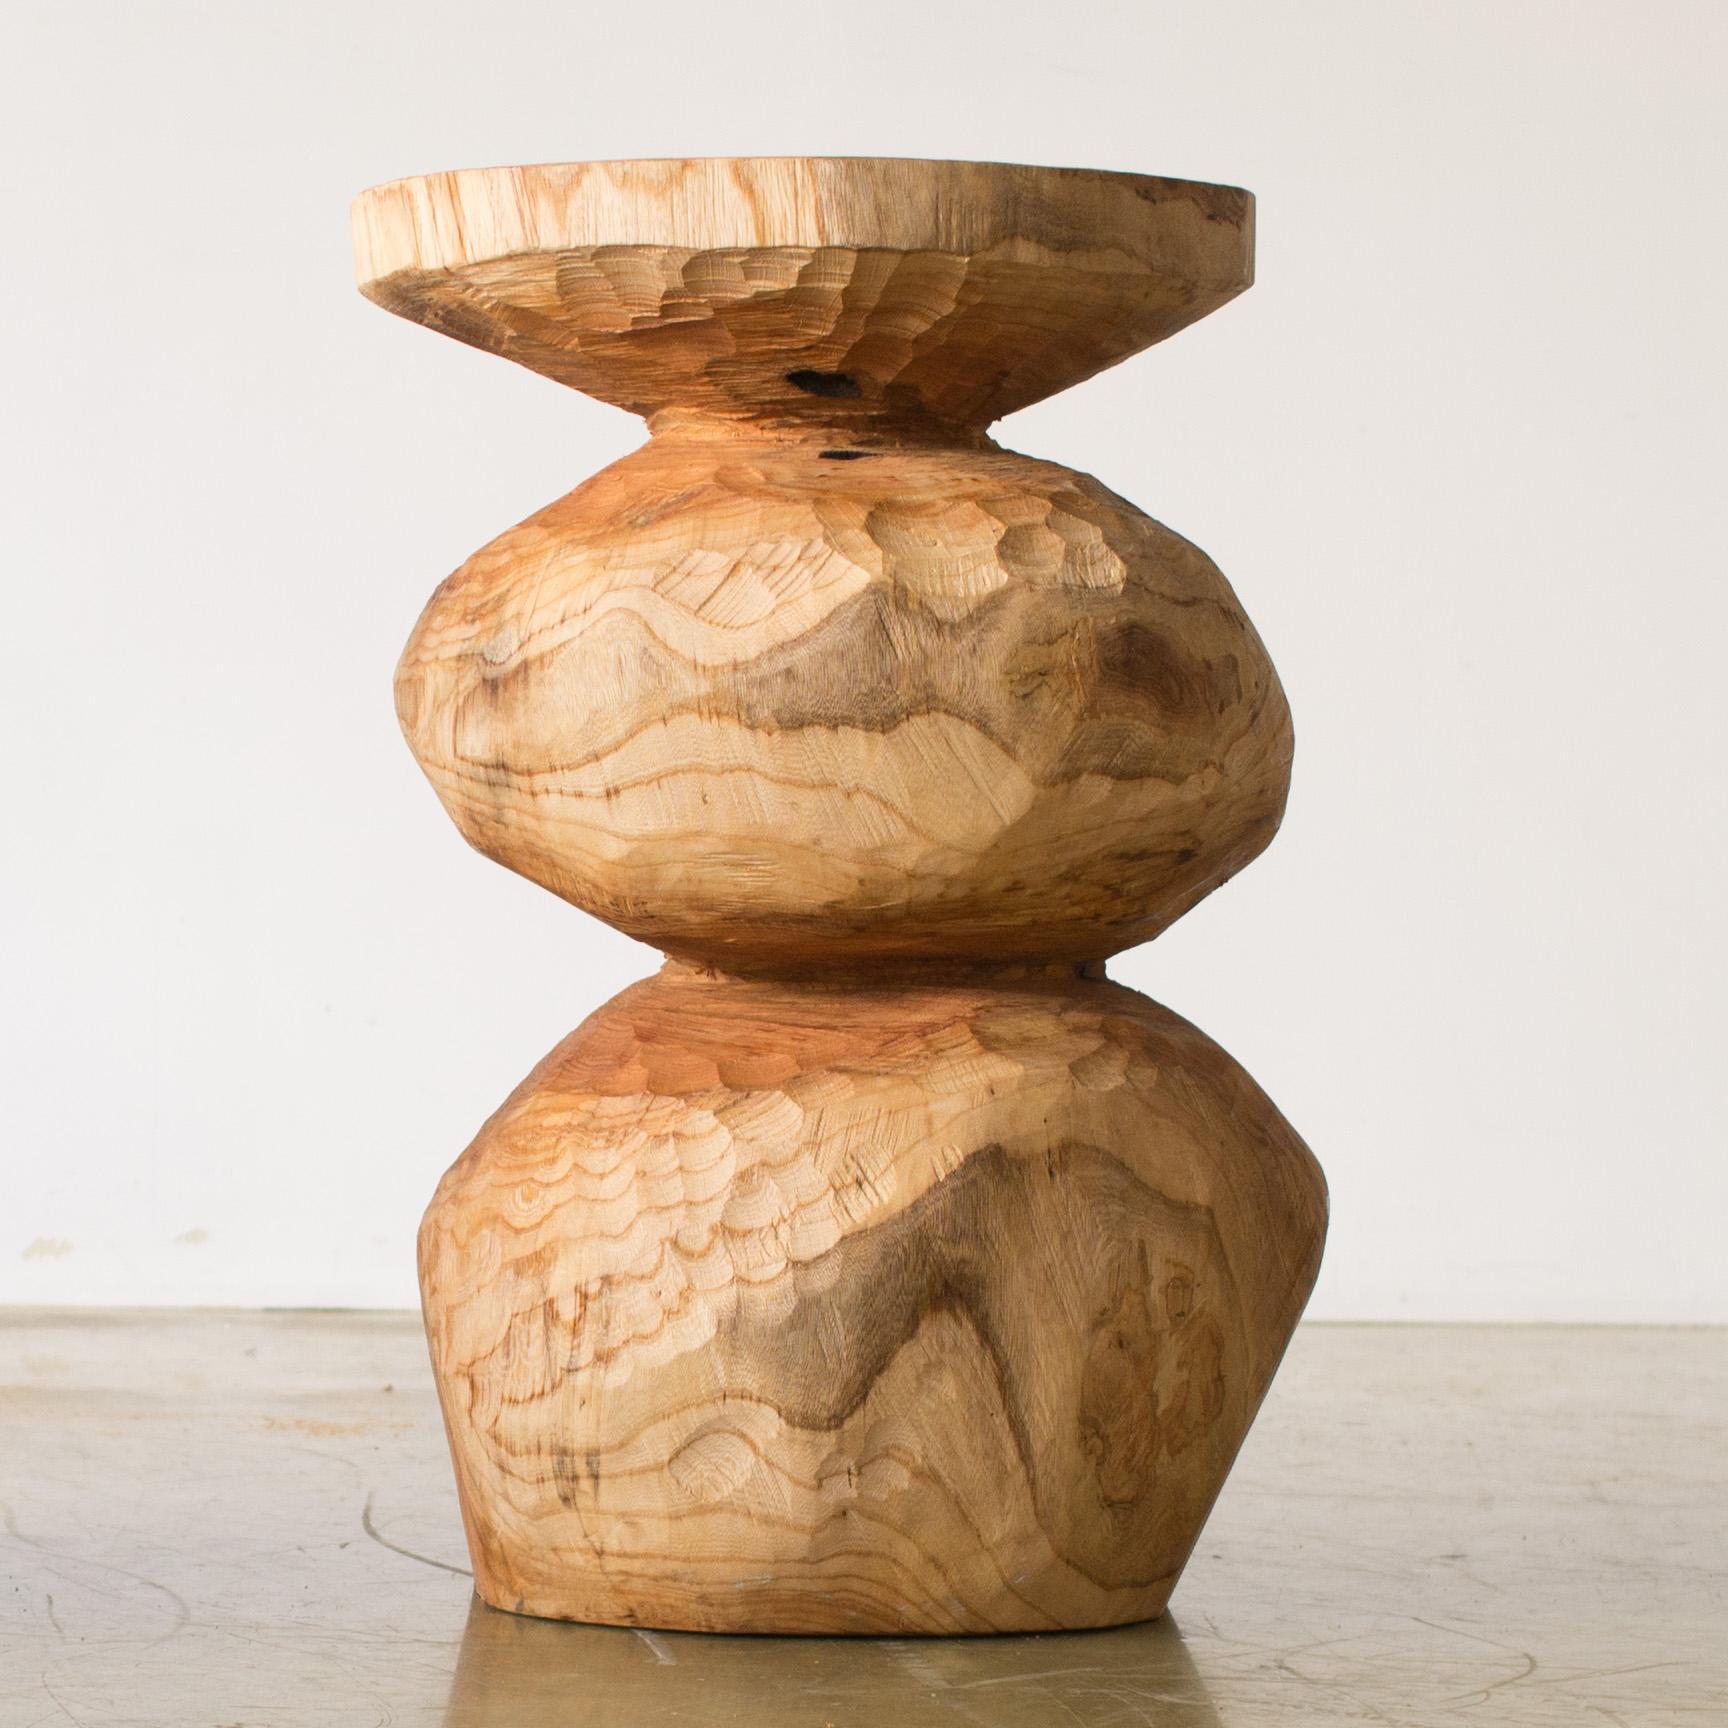 Japanese Hiroyuki Nishimura Furniture Sculptural Wood Stool10-09 Tribal Glamping For Sale